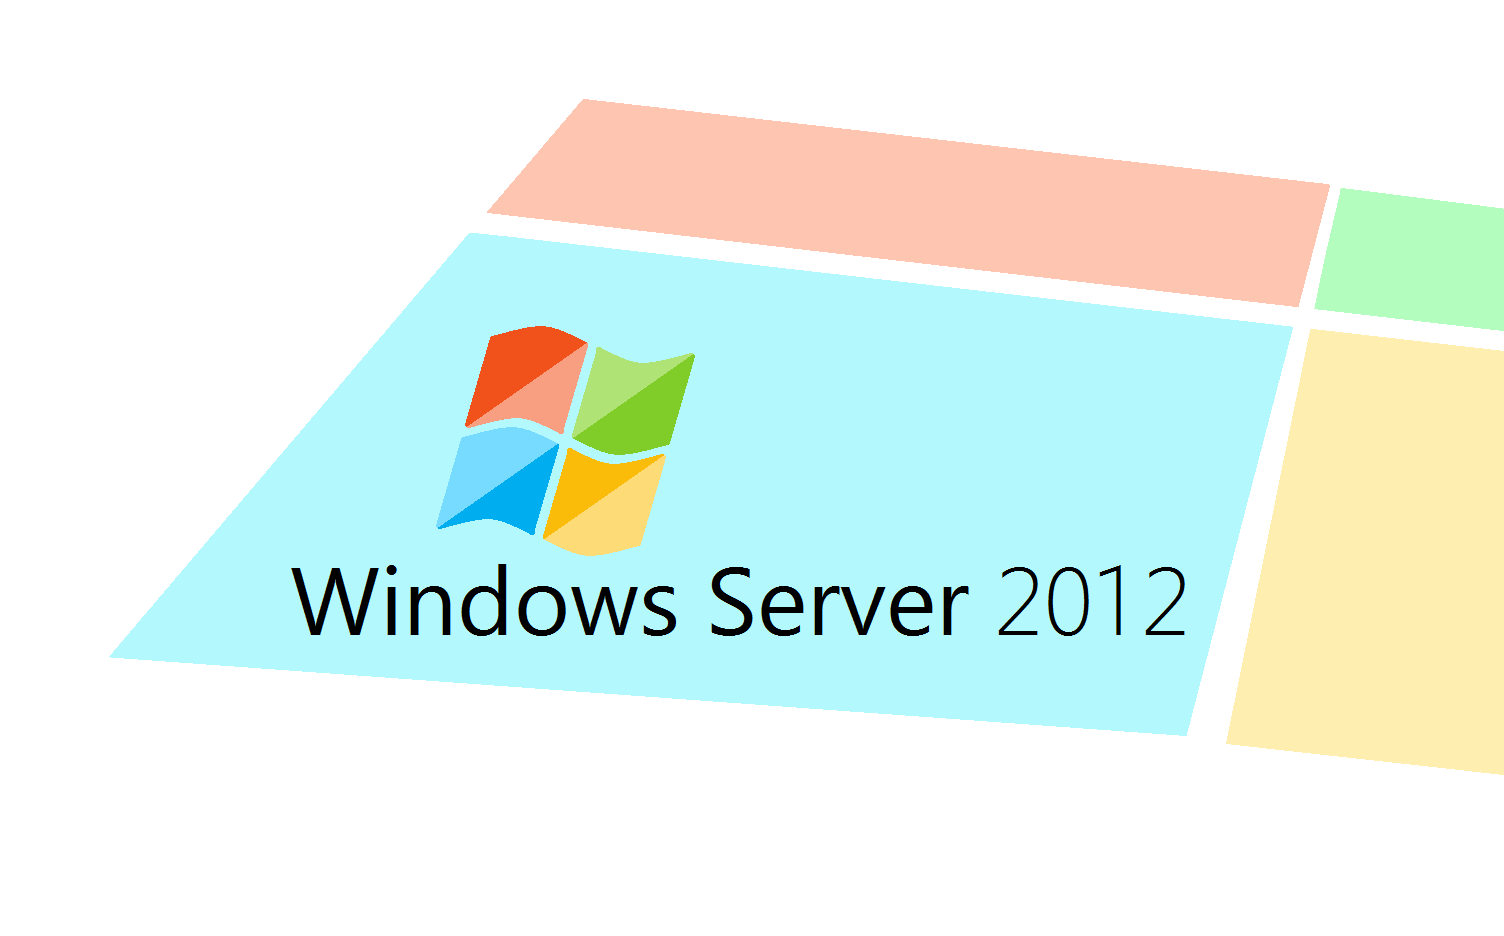 Server 2012 Logo - Logos images Windows Server 2012 Logo HD wallpaper and background ...